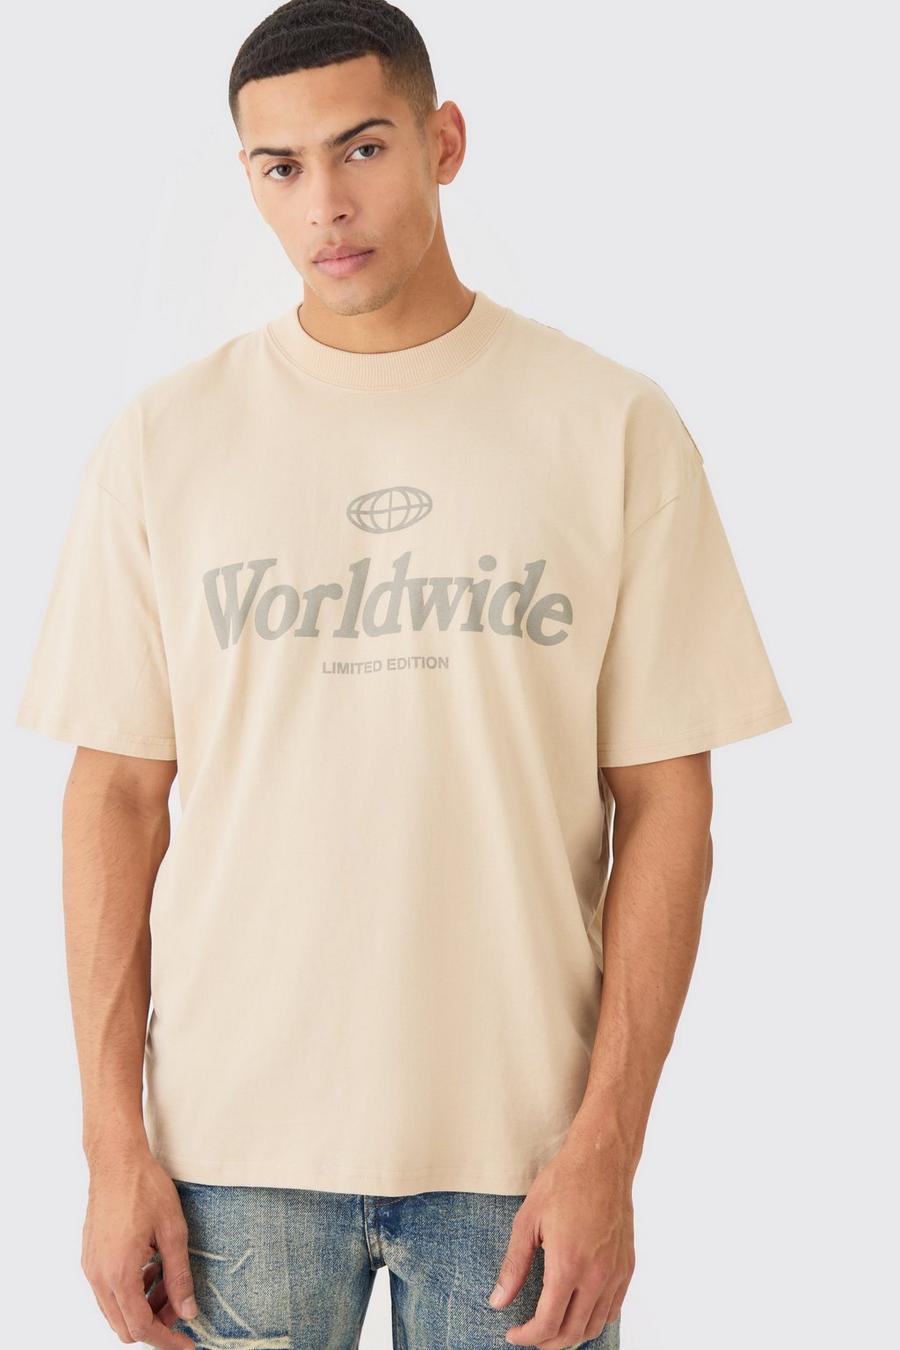 Sand Oversized Worldwide T-shirt